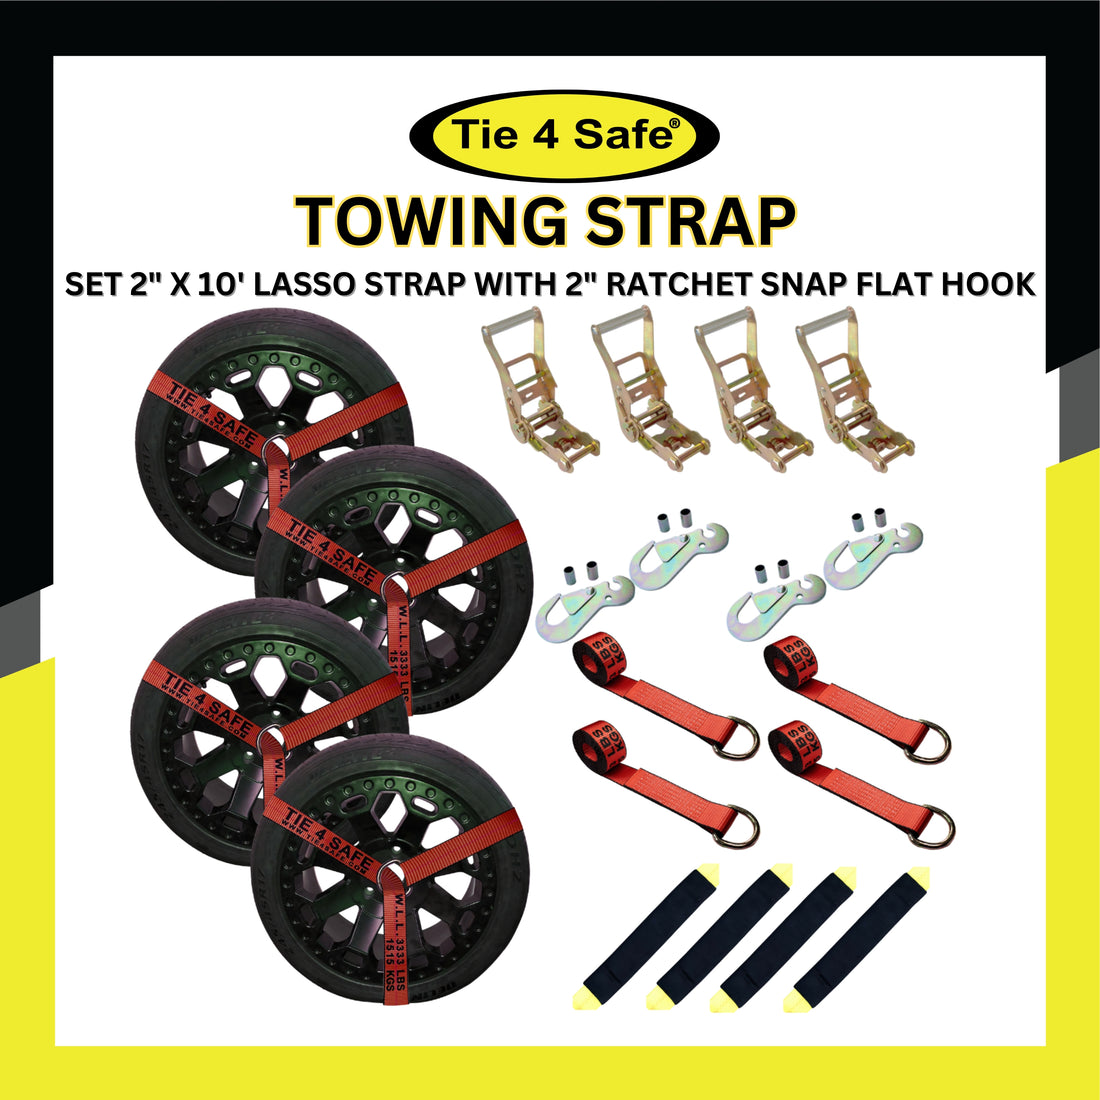 4 Set 2" x 10' Lasso Strap With 2" Ratchet Snap Flat Hook